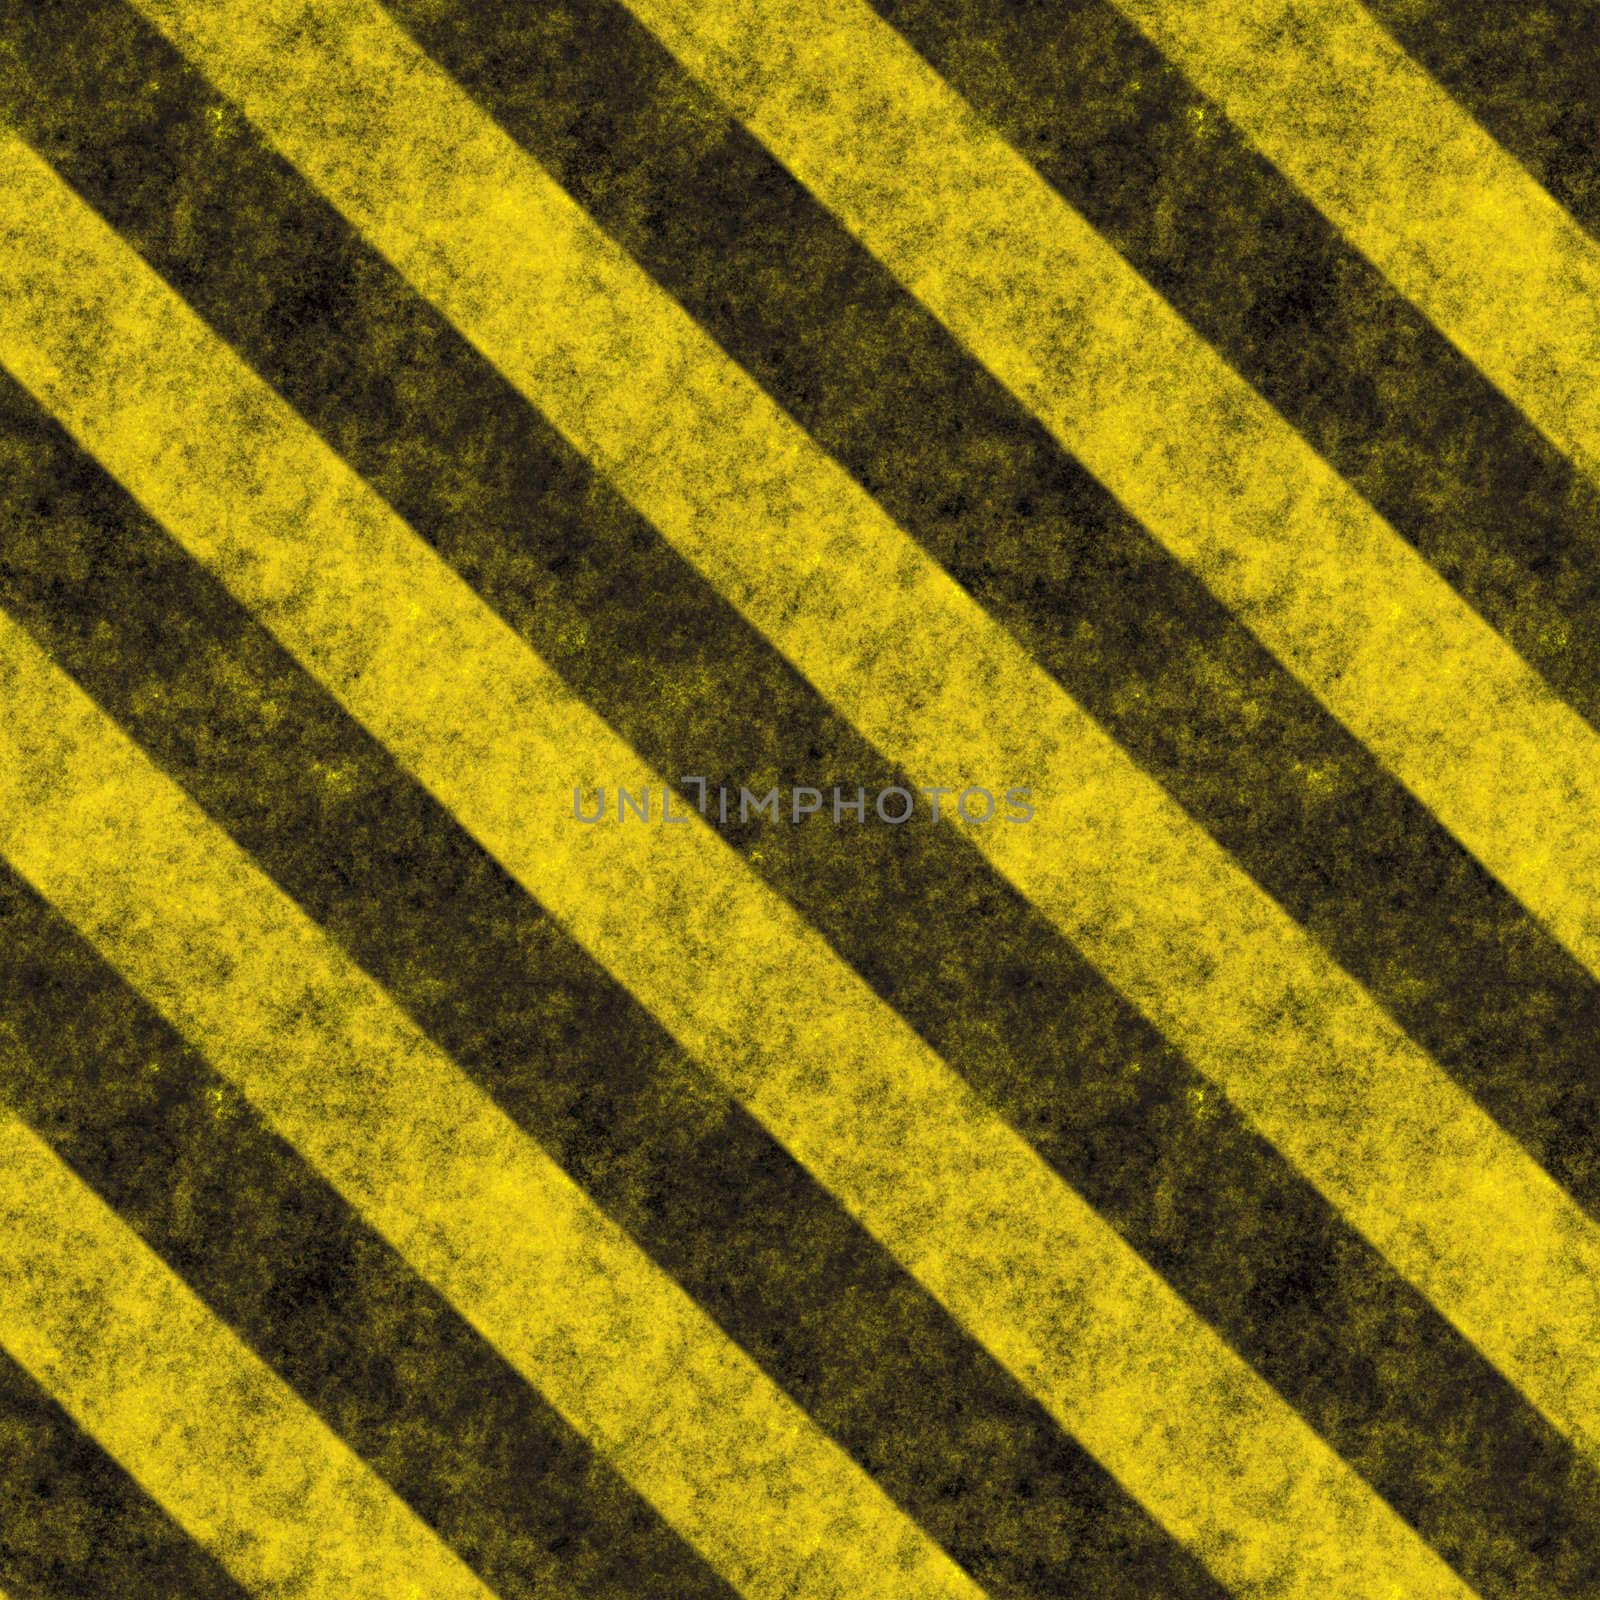 Hazard Stripes by graficallyminded